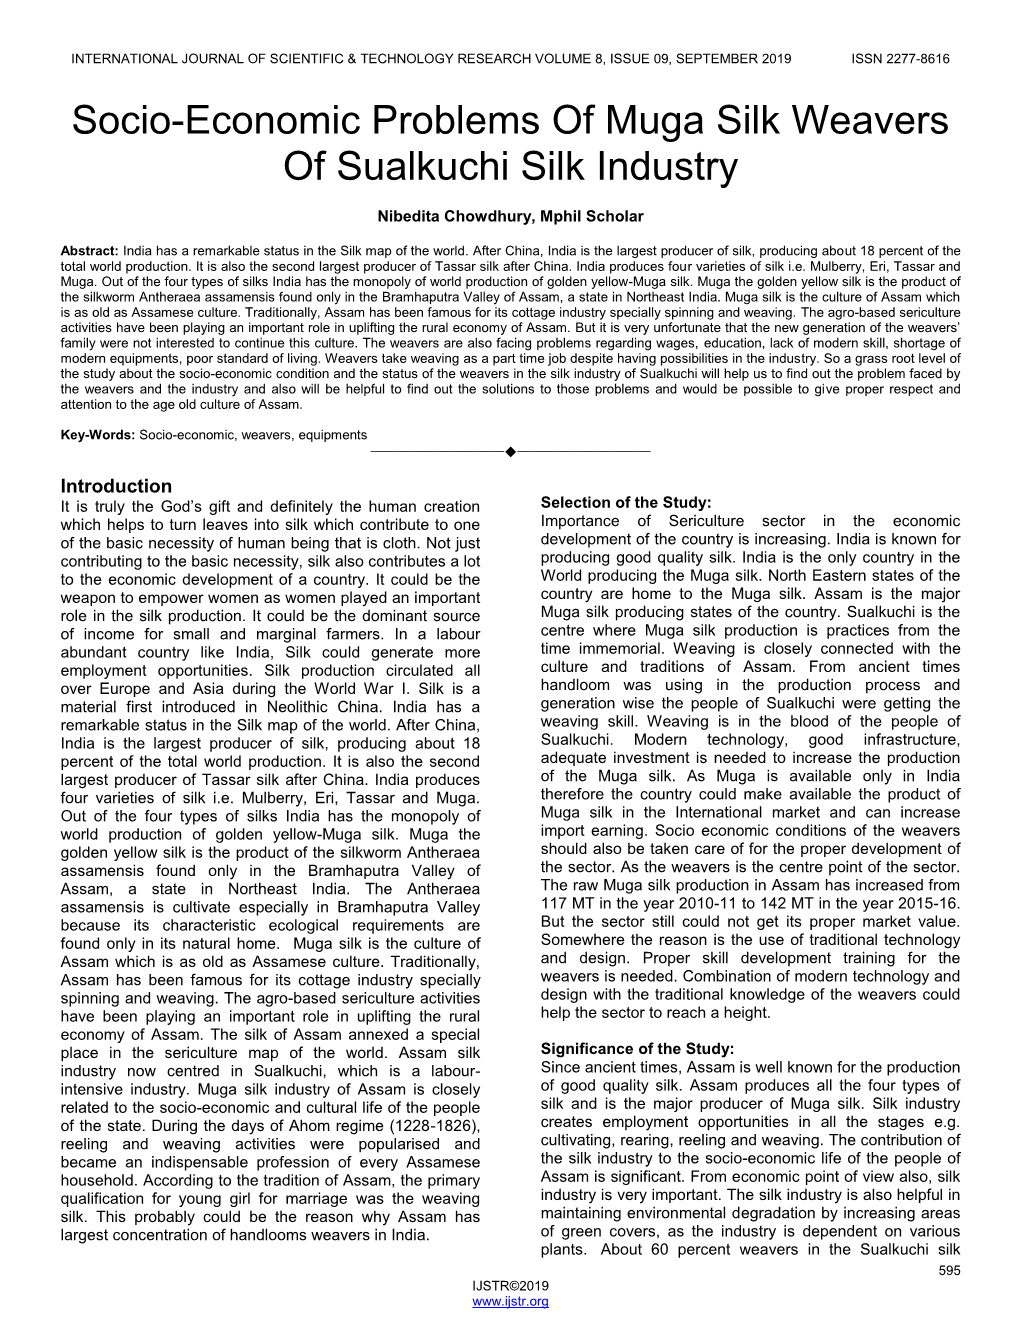 Socio-Economic Problems of Muga Silk Weavers of Sualkuchi Silk Industry